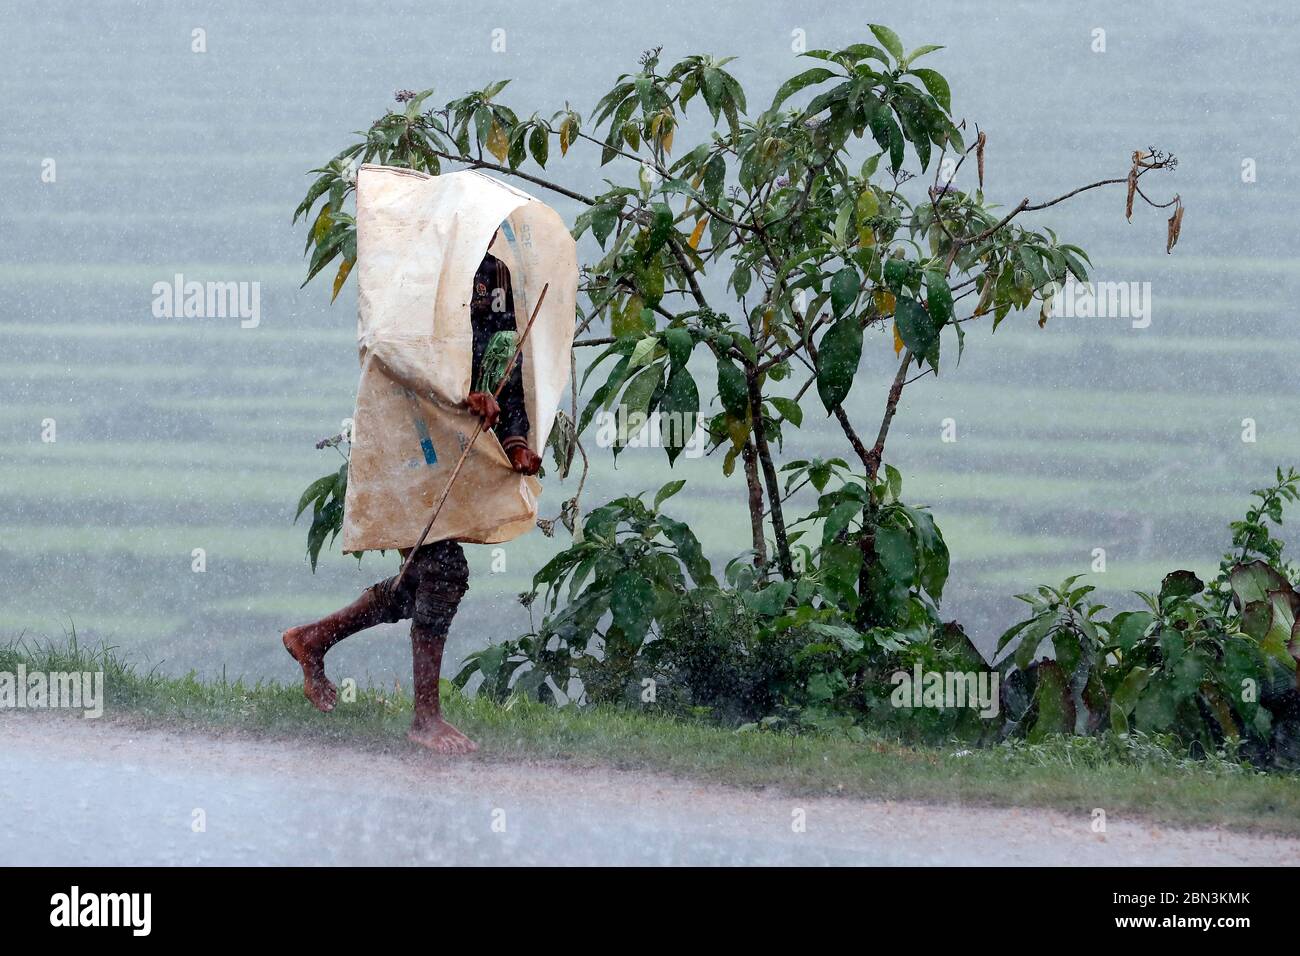 Mann unter einem Plastikbeutel bei starkem Regen. Madagaskar. Stockfoto